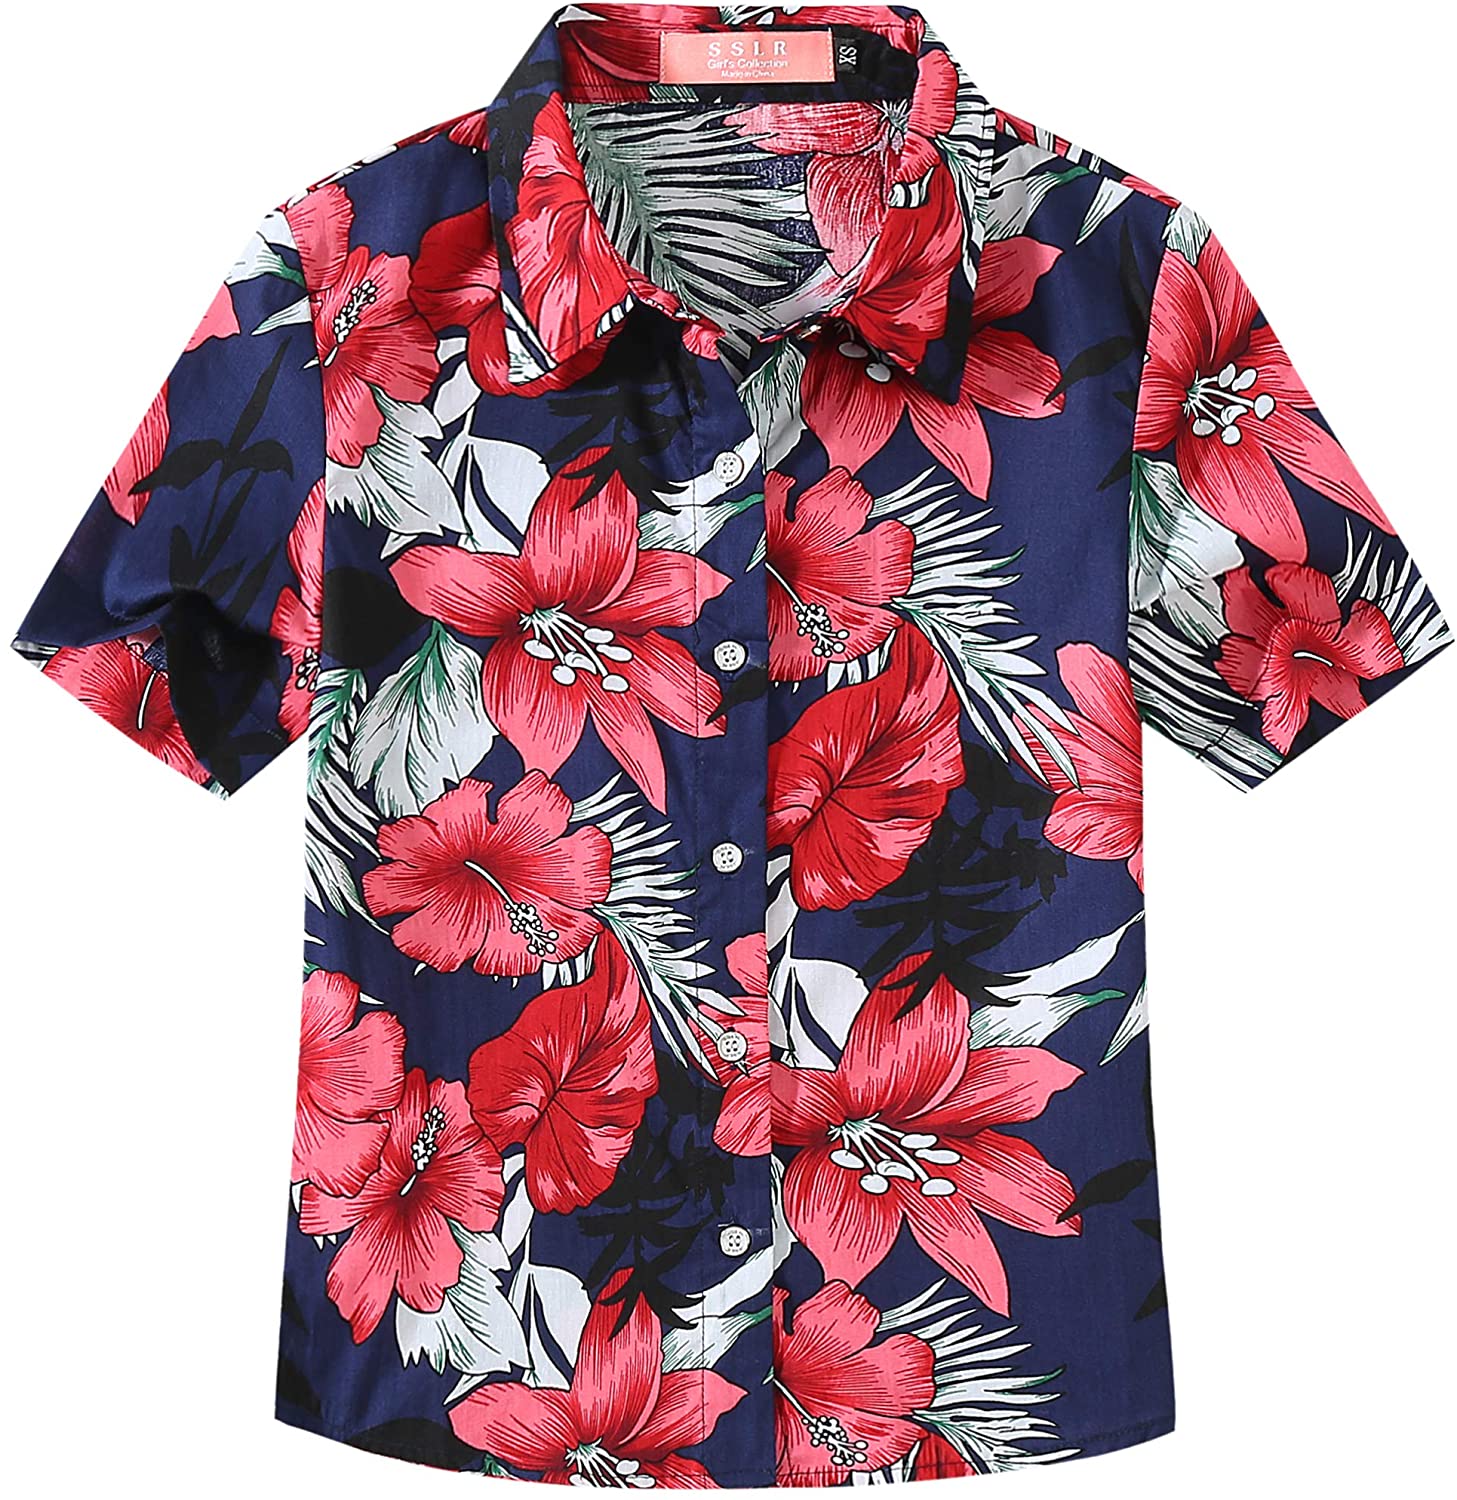 SSLR Mens Floral Hawaiian Button Down Casual Short Sleeve Shirt 